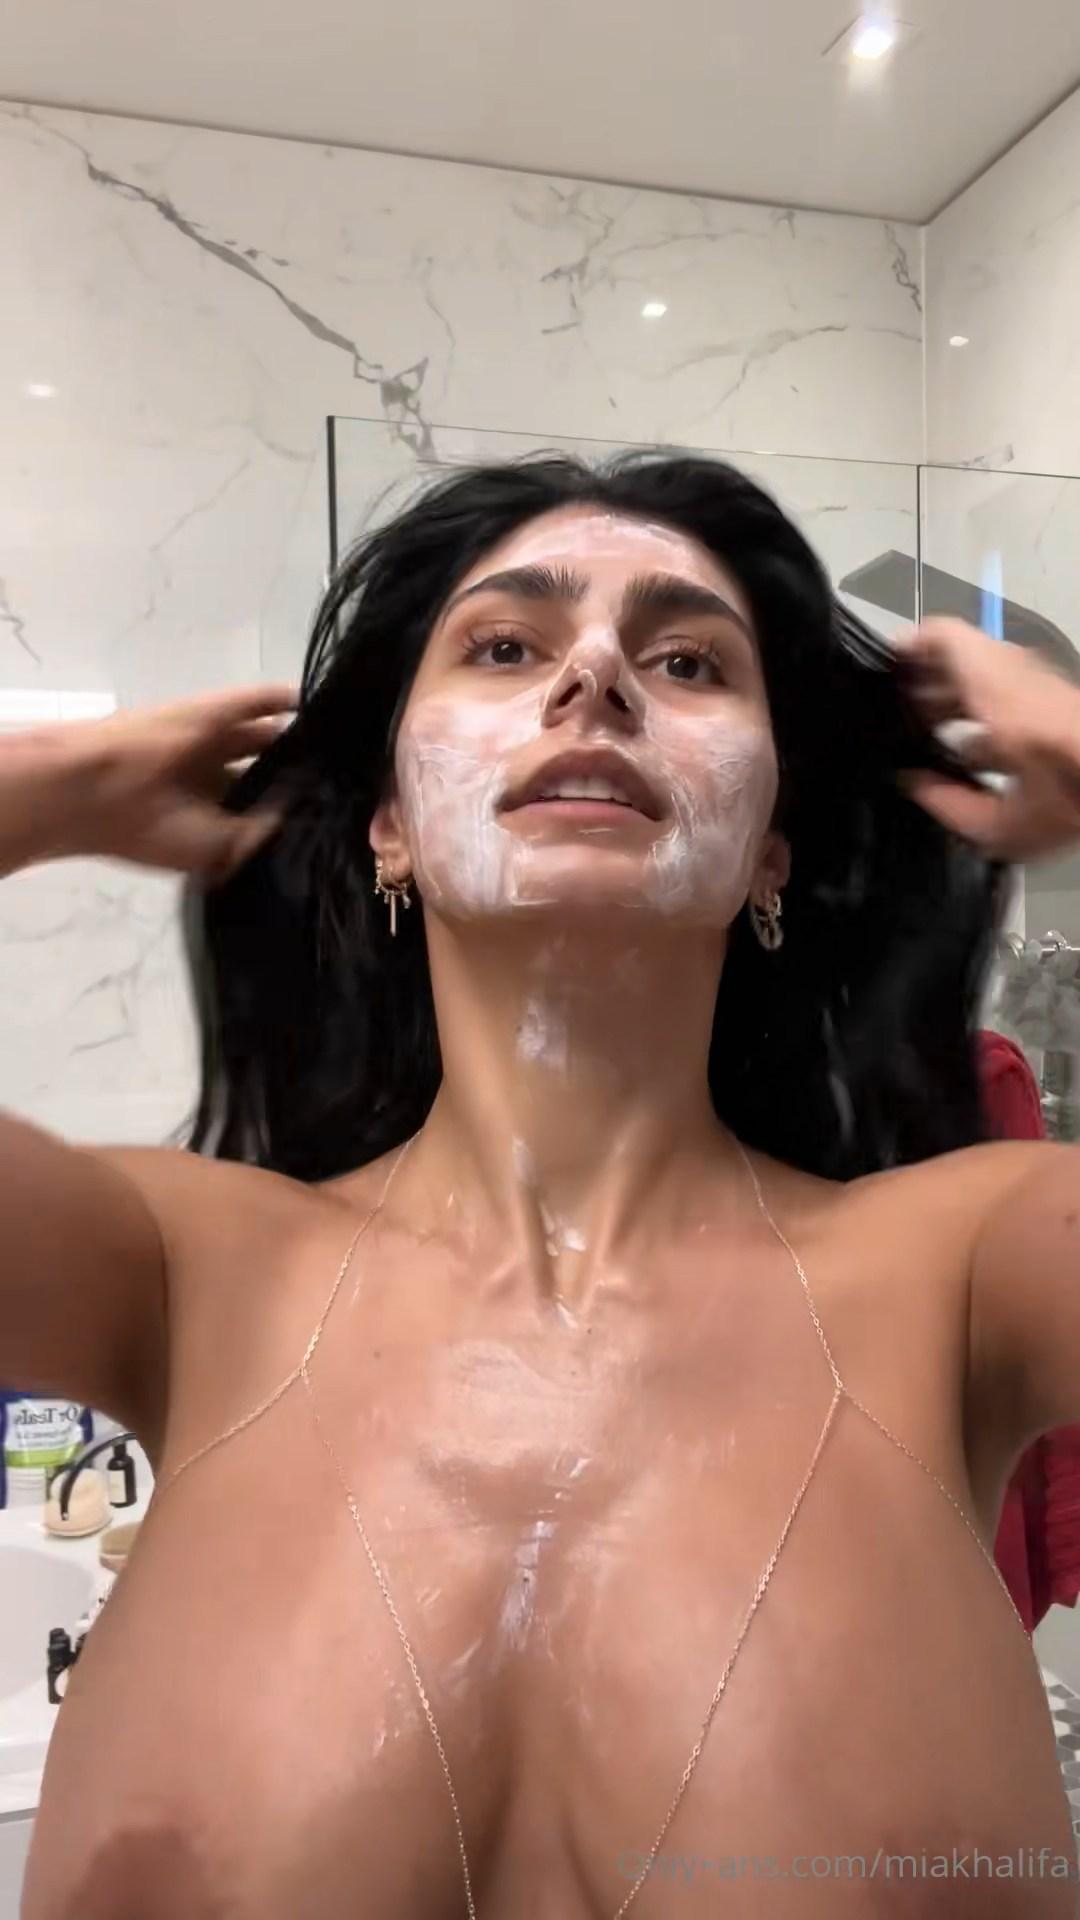 mia khalifa nude shower prep part 2 onlyfans video leaked mjhtqk